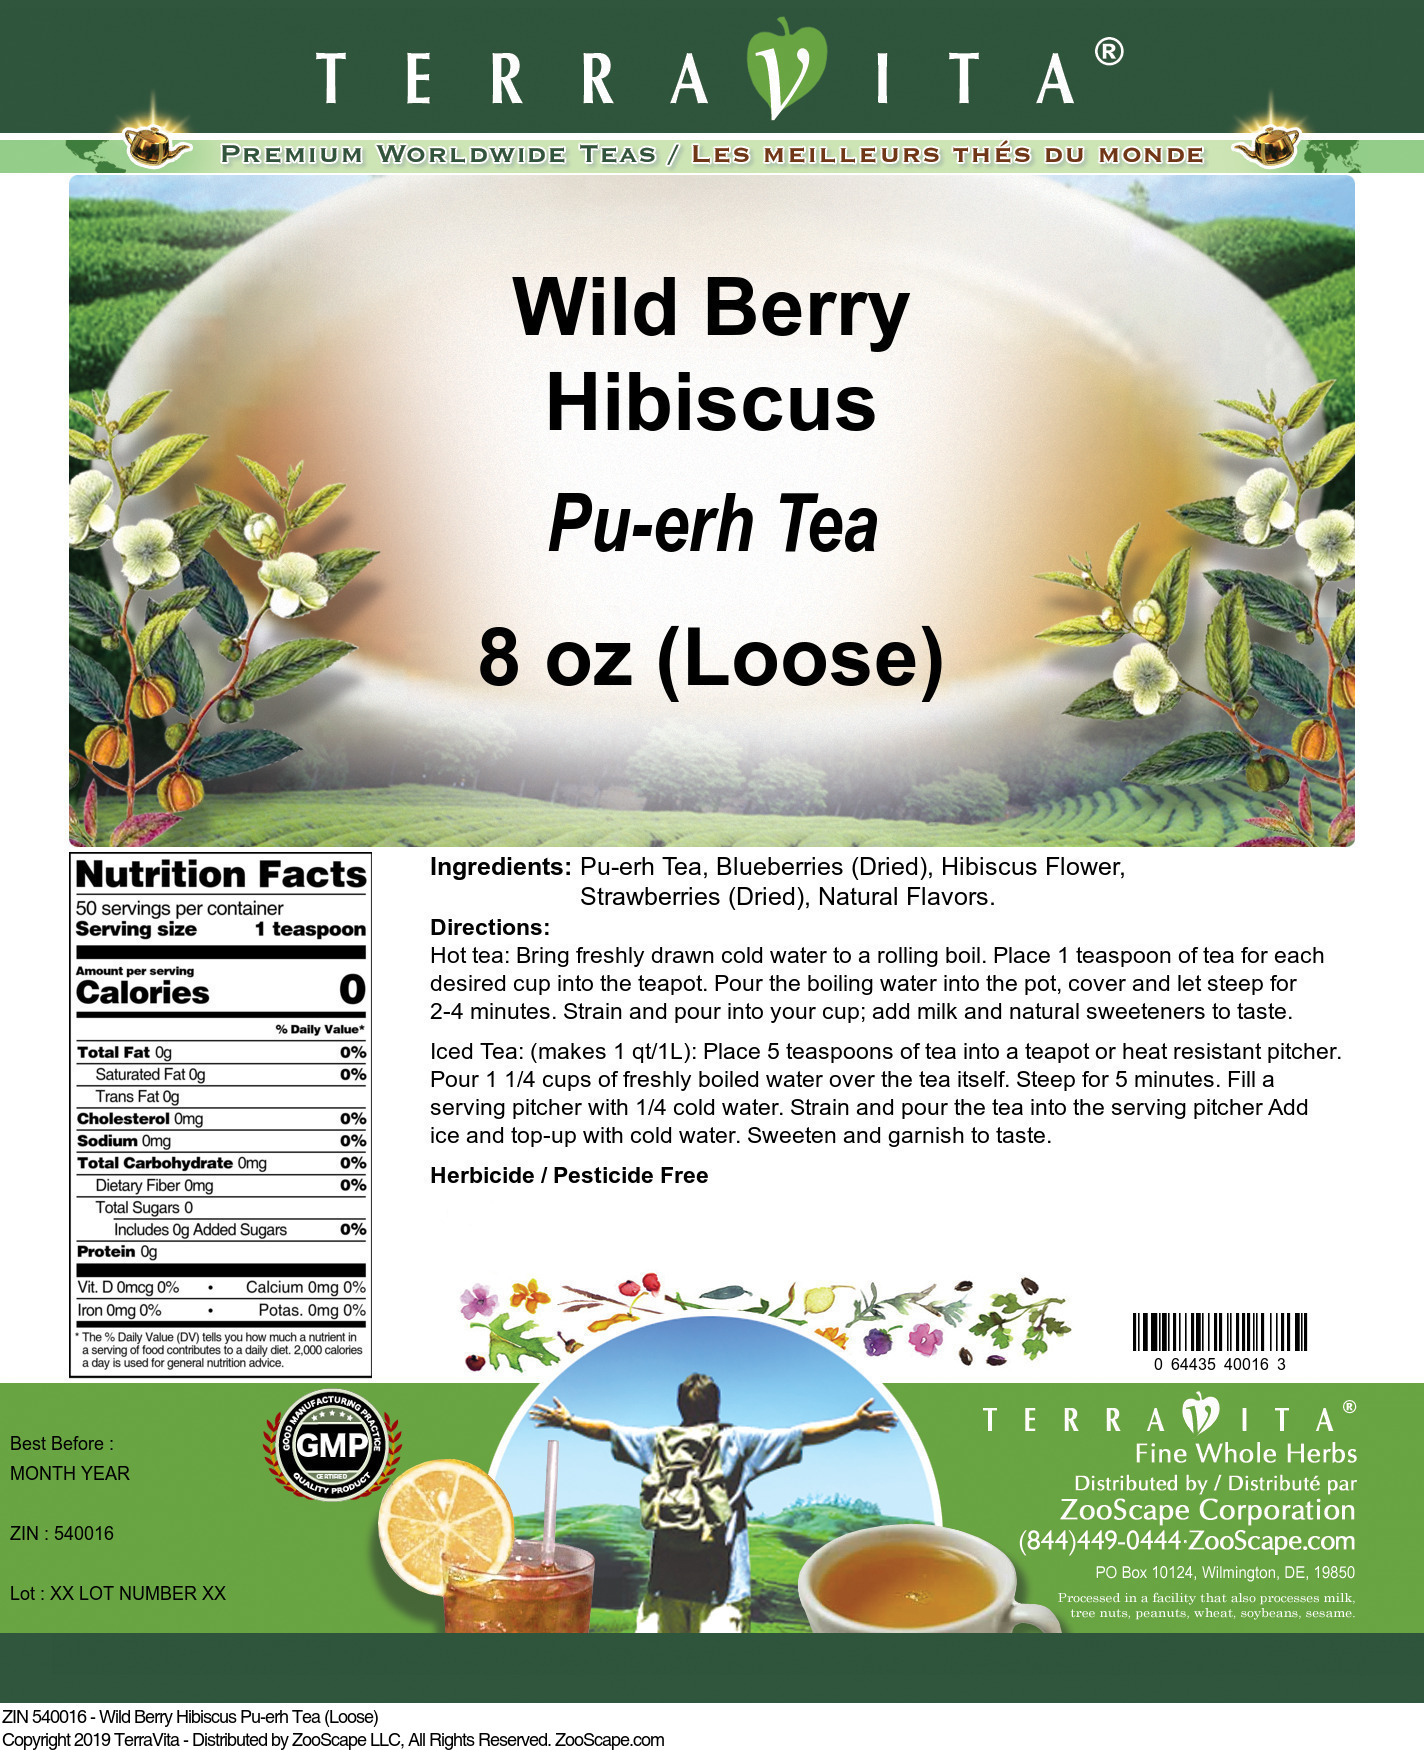 Wild Berry Hibiscus Pu-erh Tea (Loose) - Label